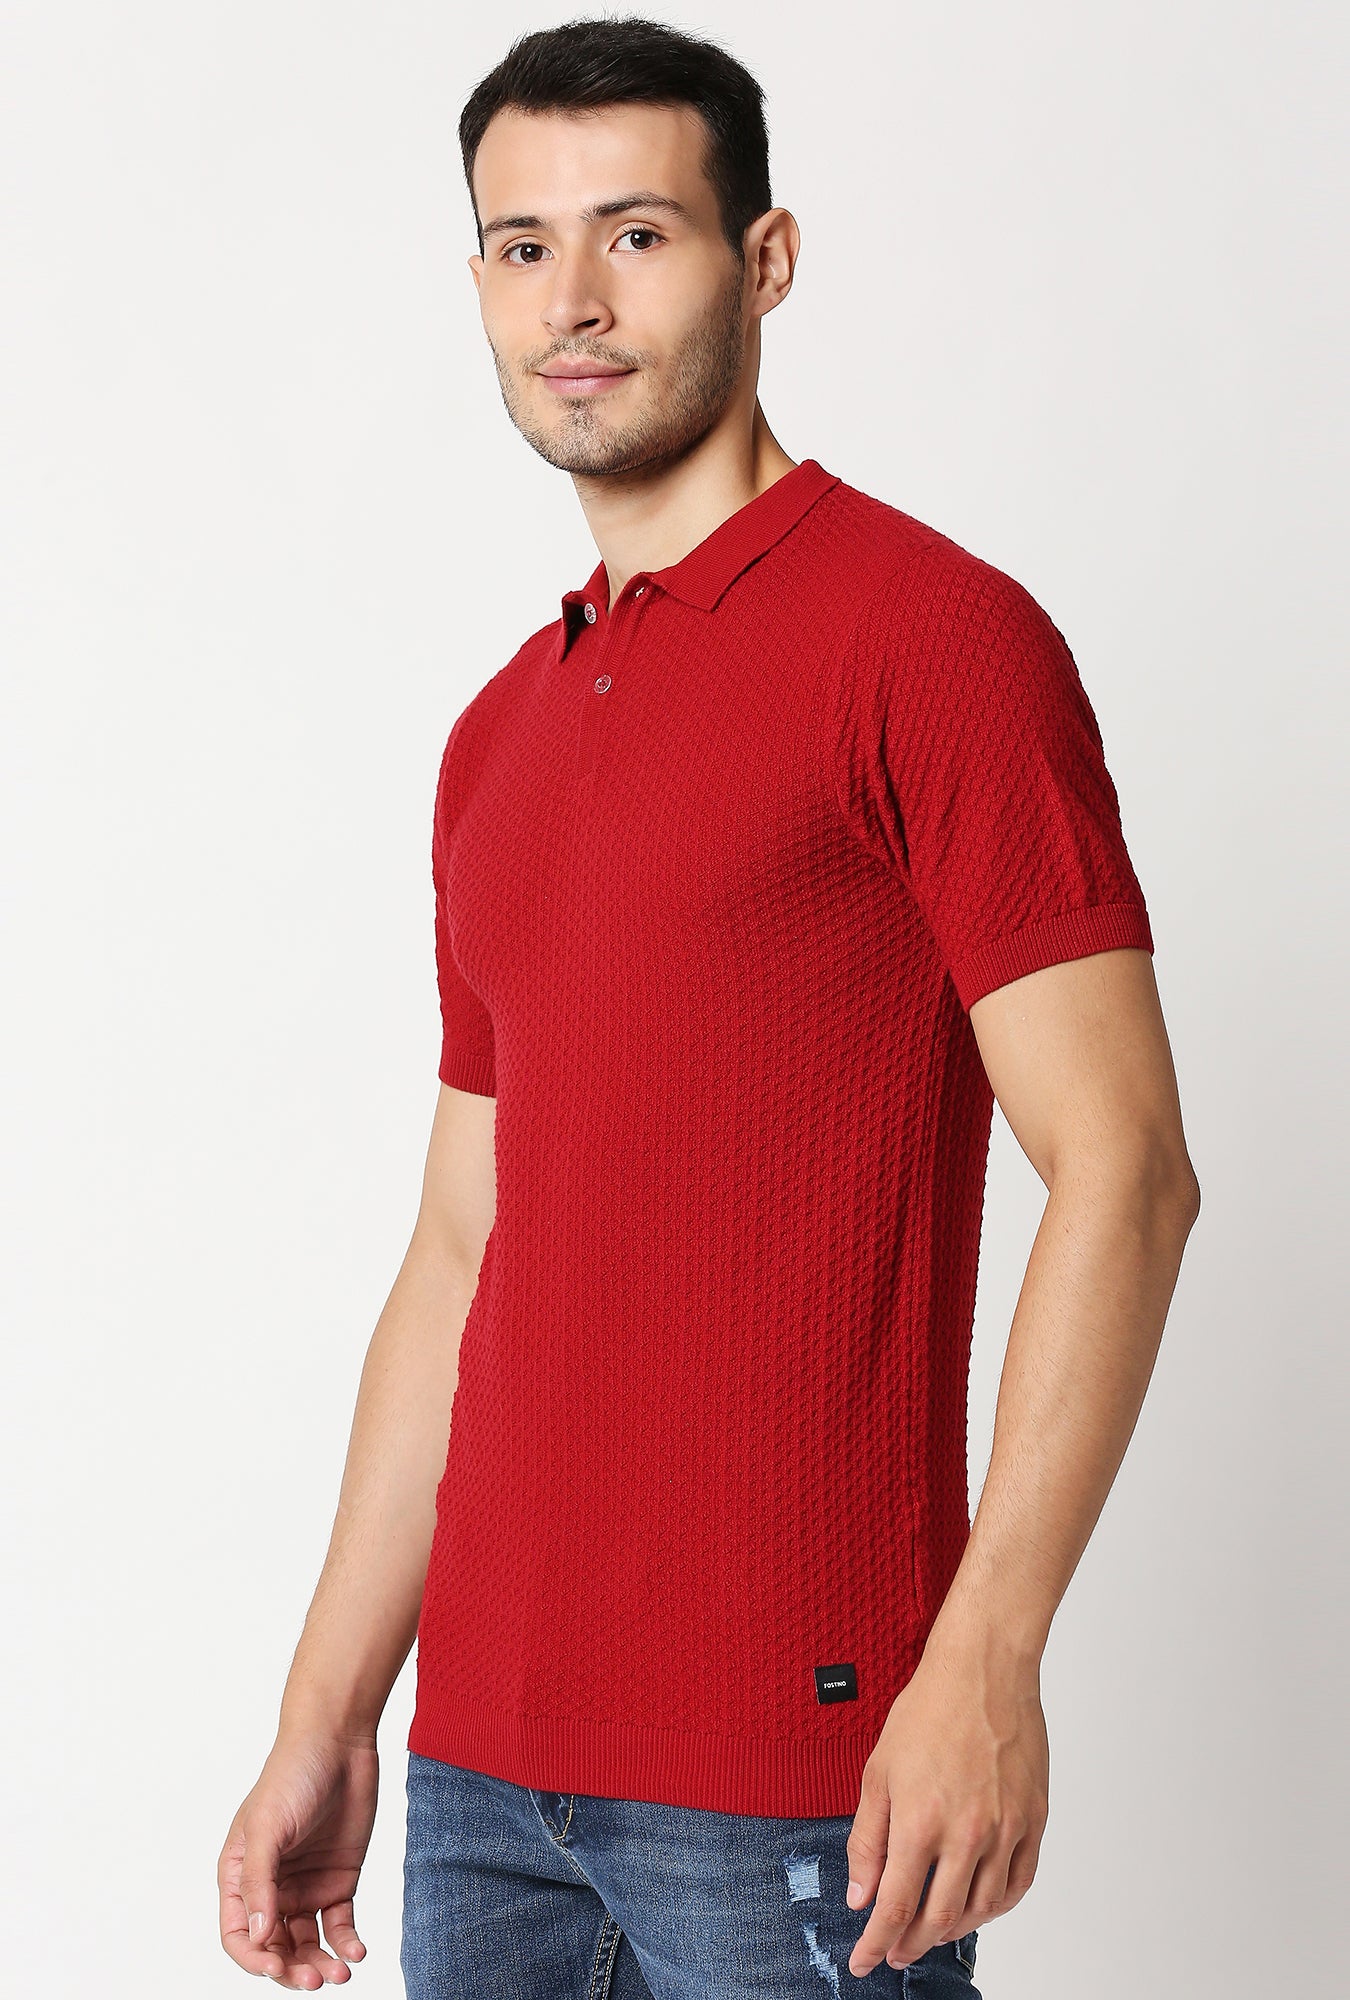 Fostino Beta Red Polo T-Shirt - Fostino - T-Shirts